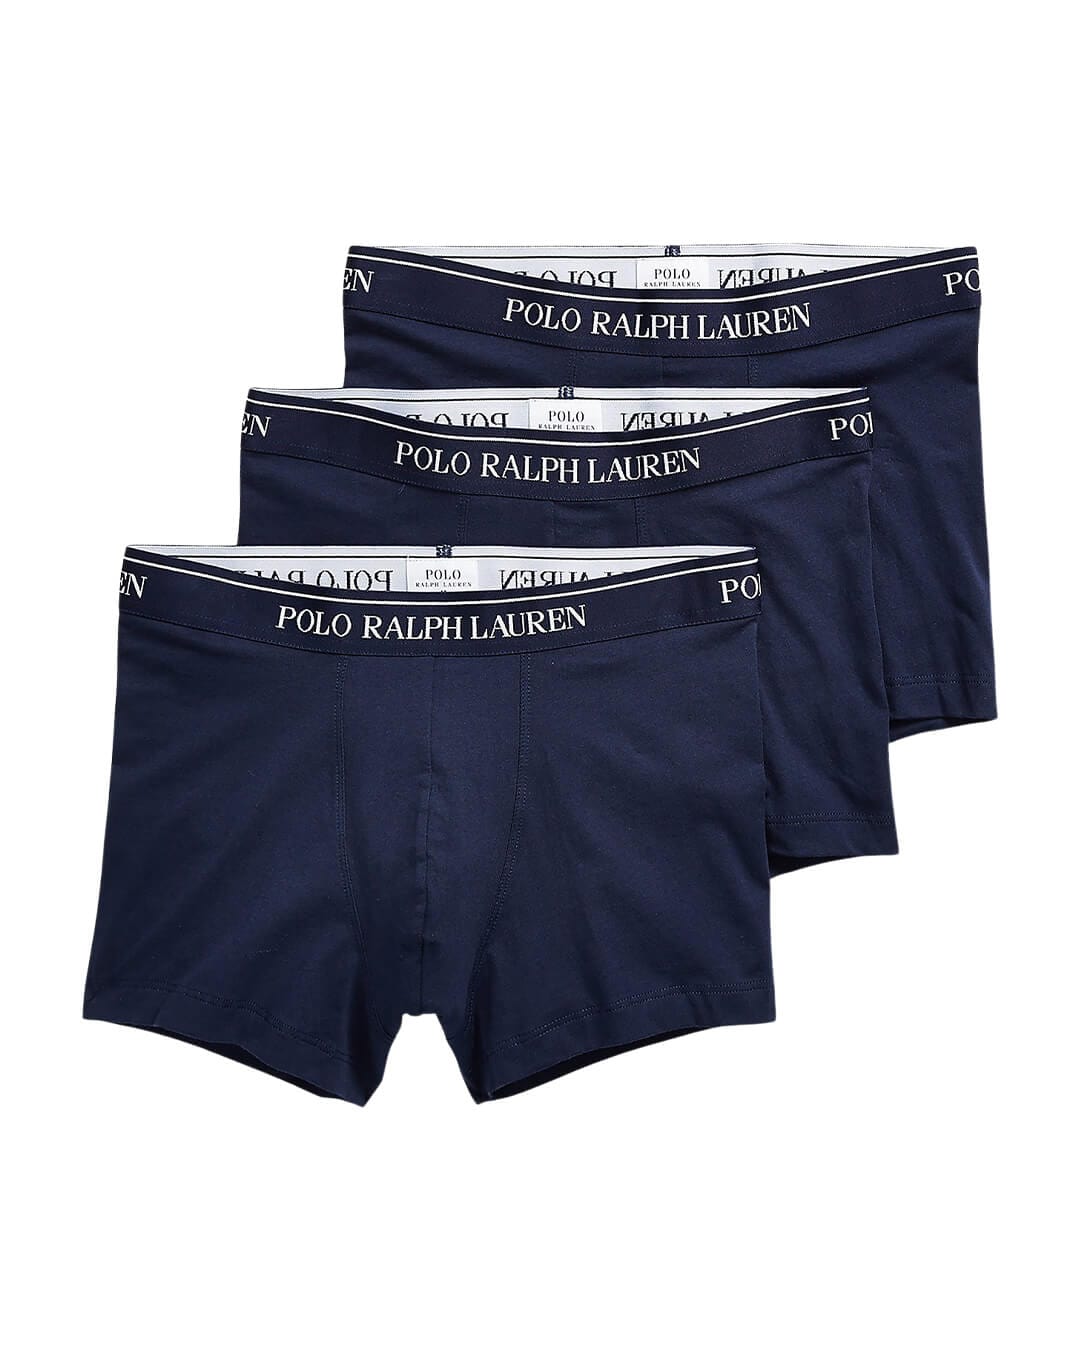 Polo Ralph Lauren Underwear Classic 3 Pack Trunks Cruise Navy